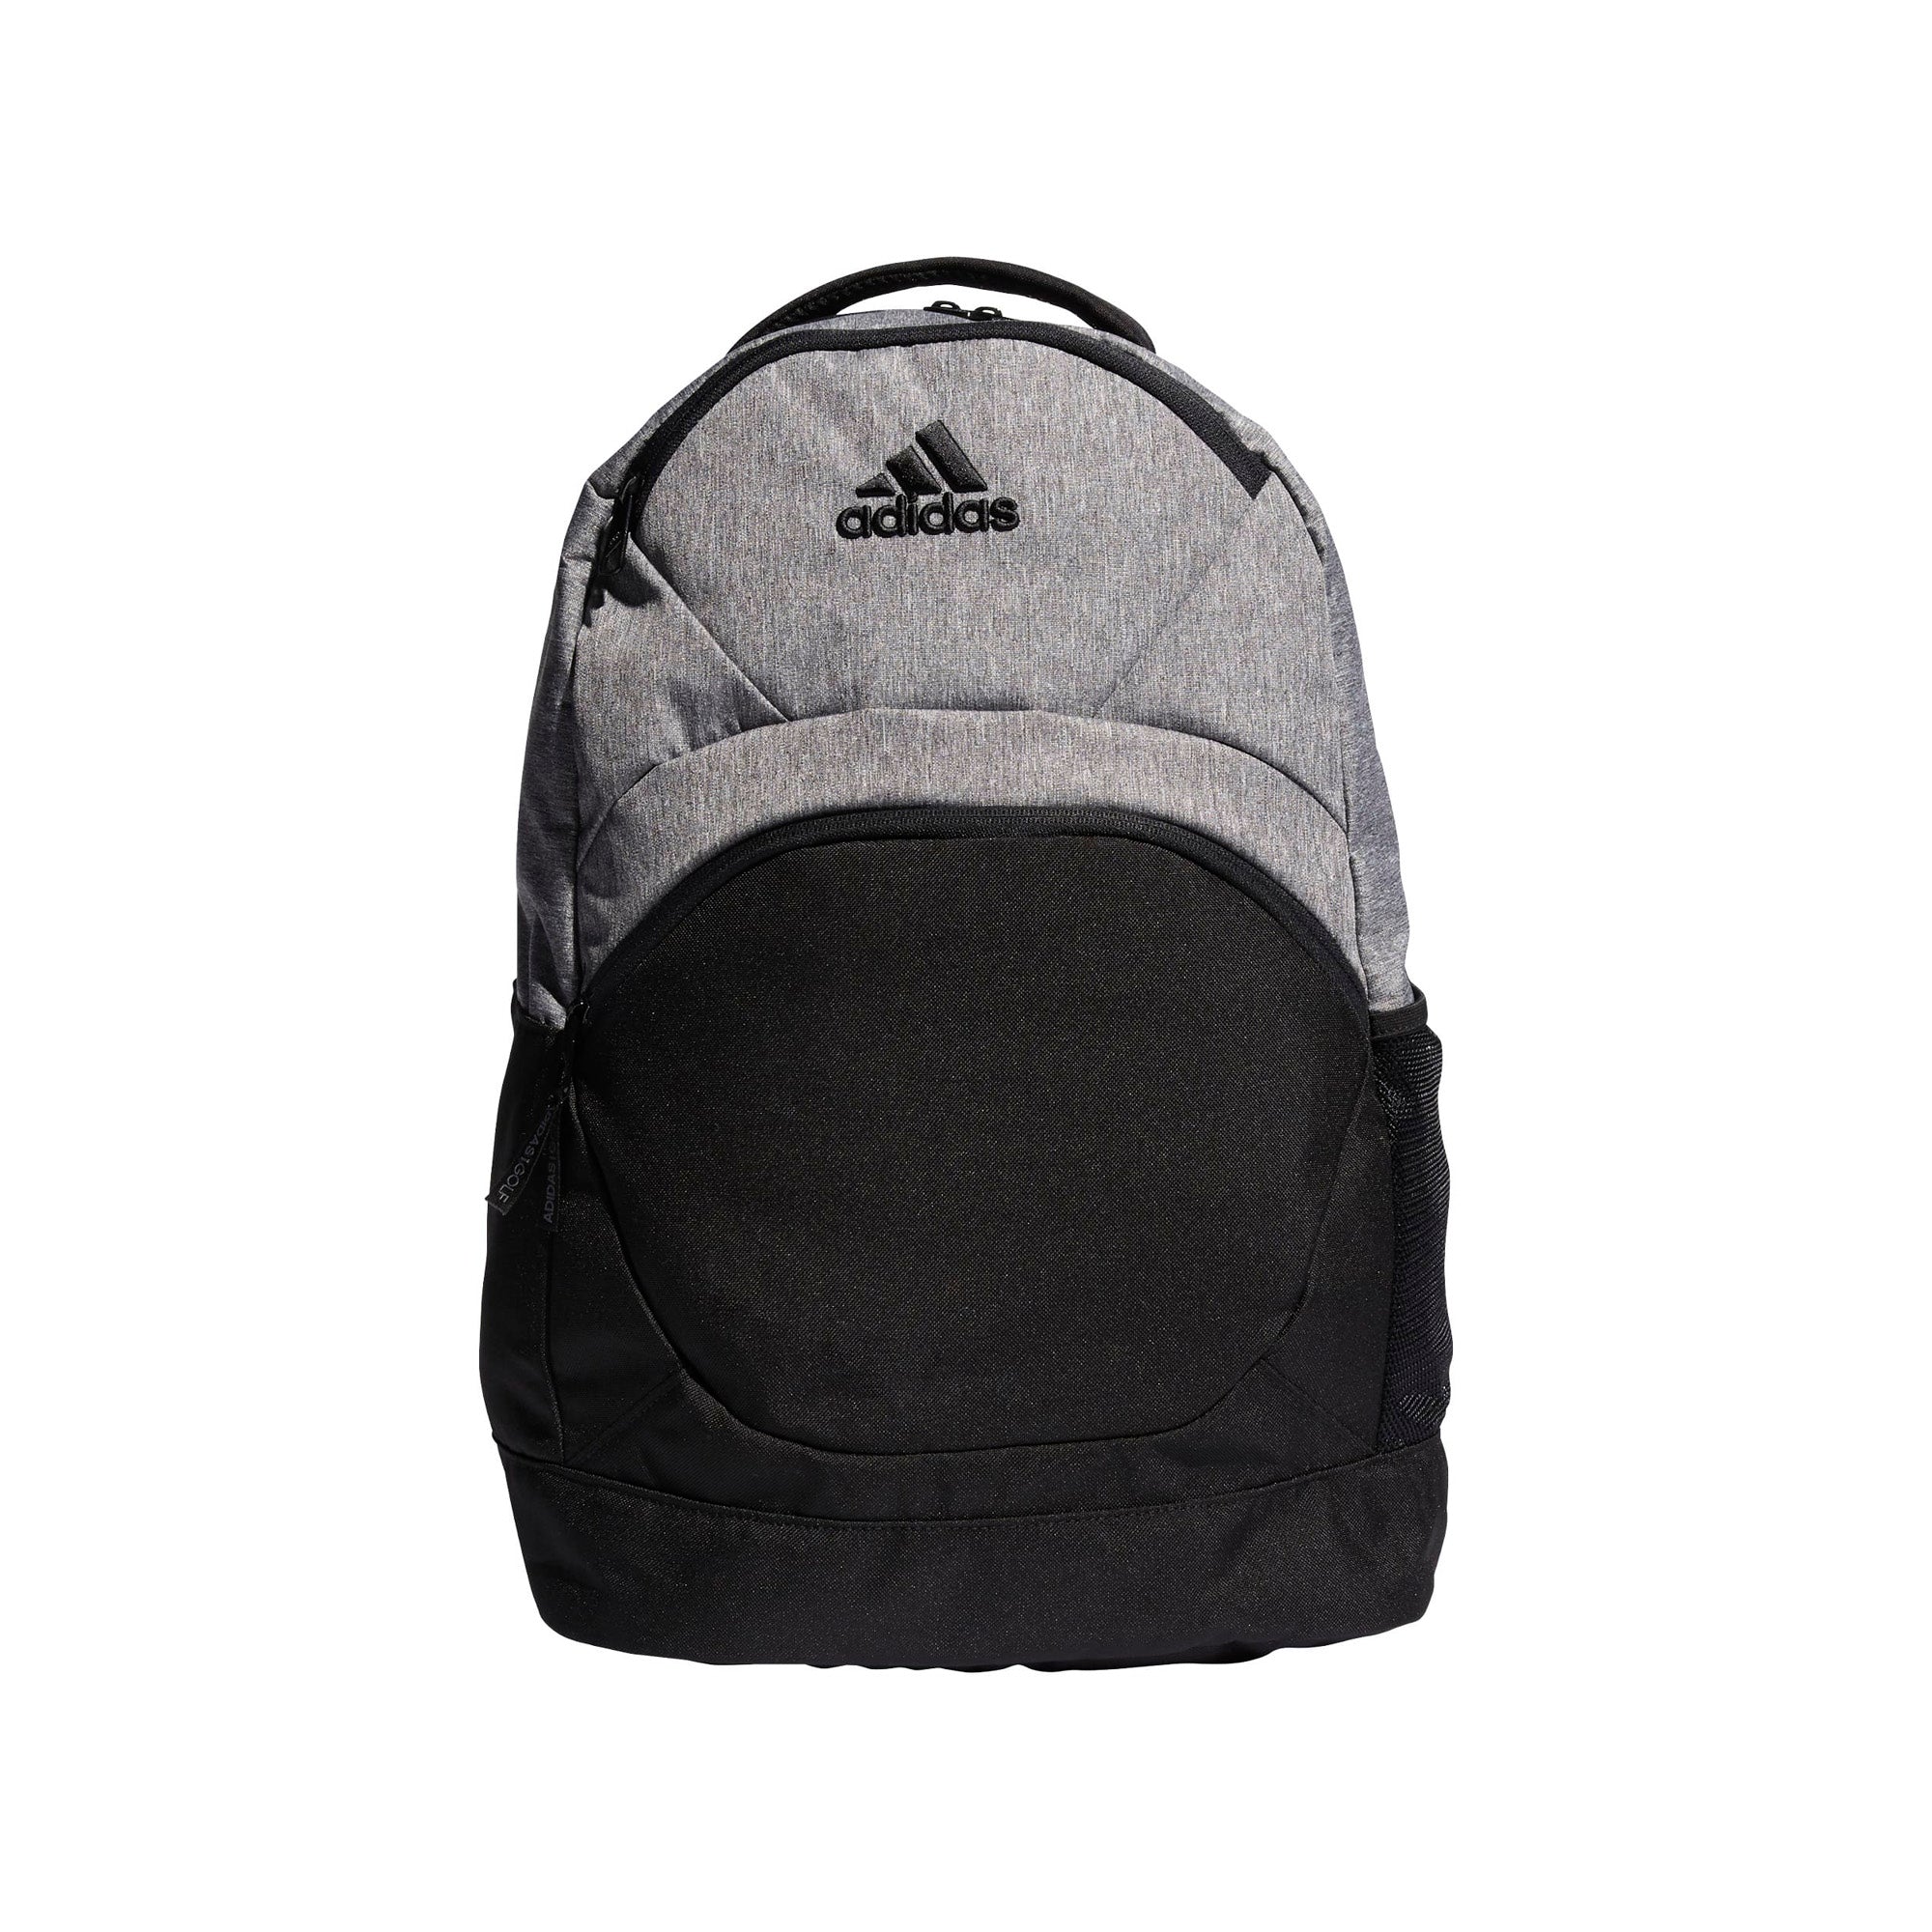 adidas-golf-medium-backpack-fi3119-black